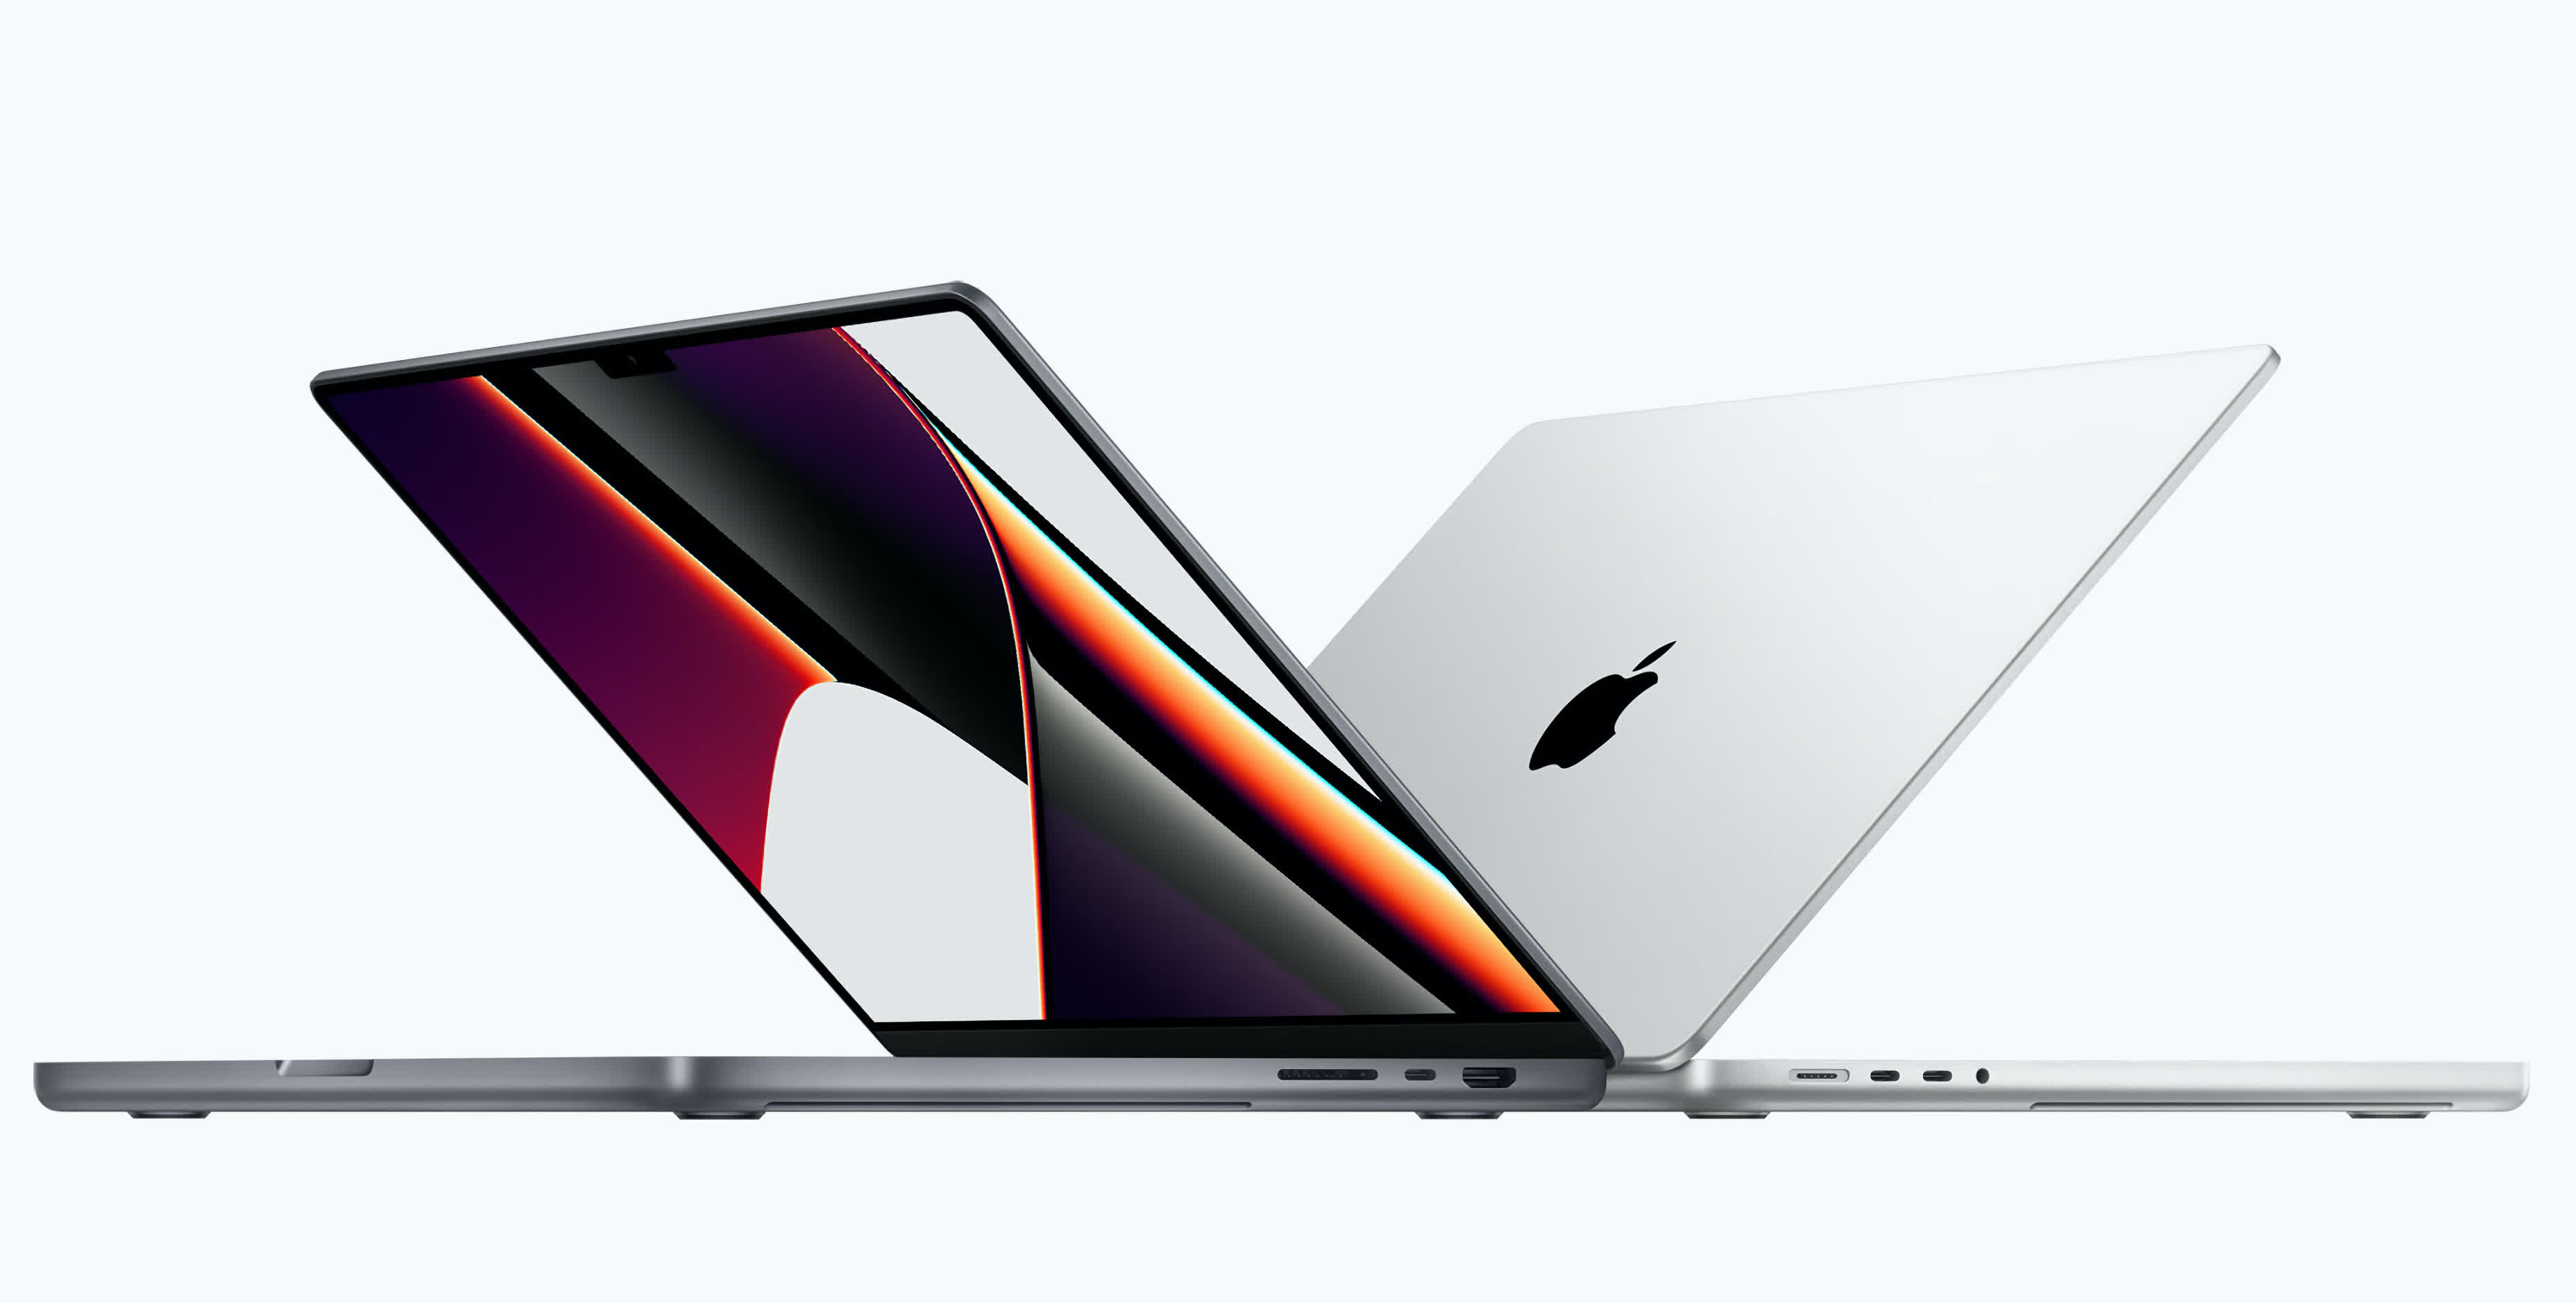 The highest spec new MacBook Pro costs over $6,000